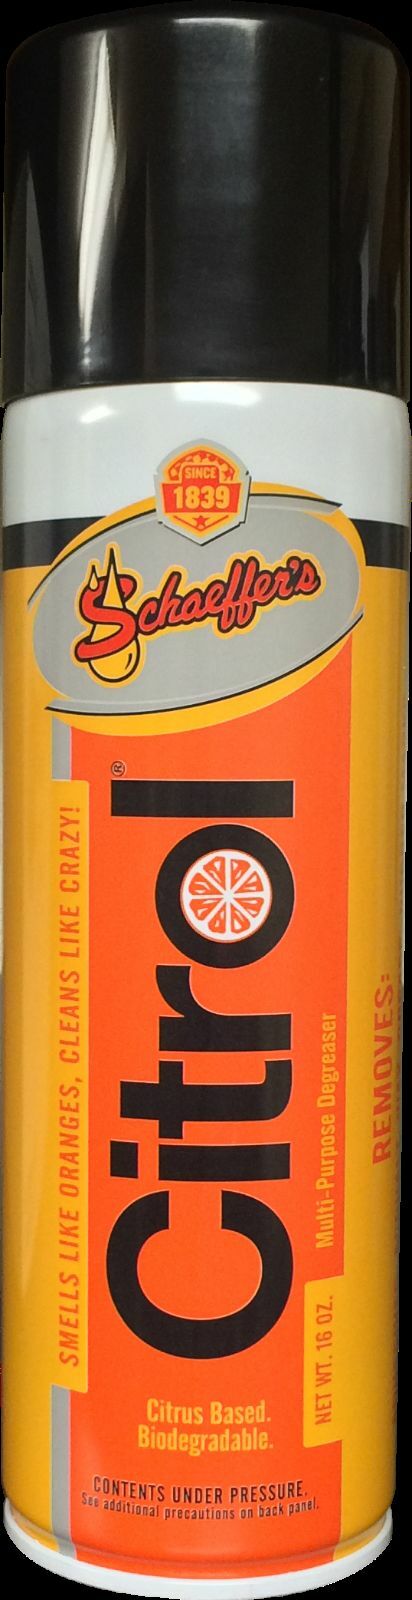 Schaeffer's 051-266-12 Citrol 266, Twelve 16 oz. cans - Spraywell